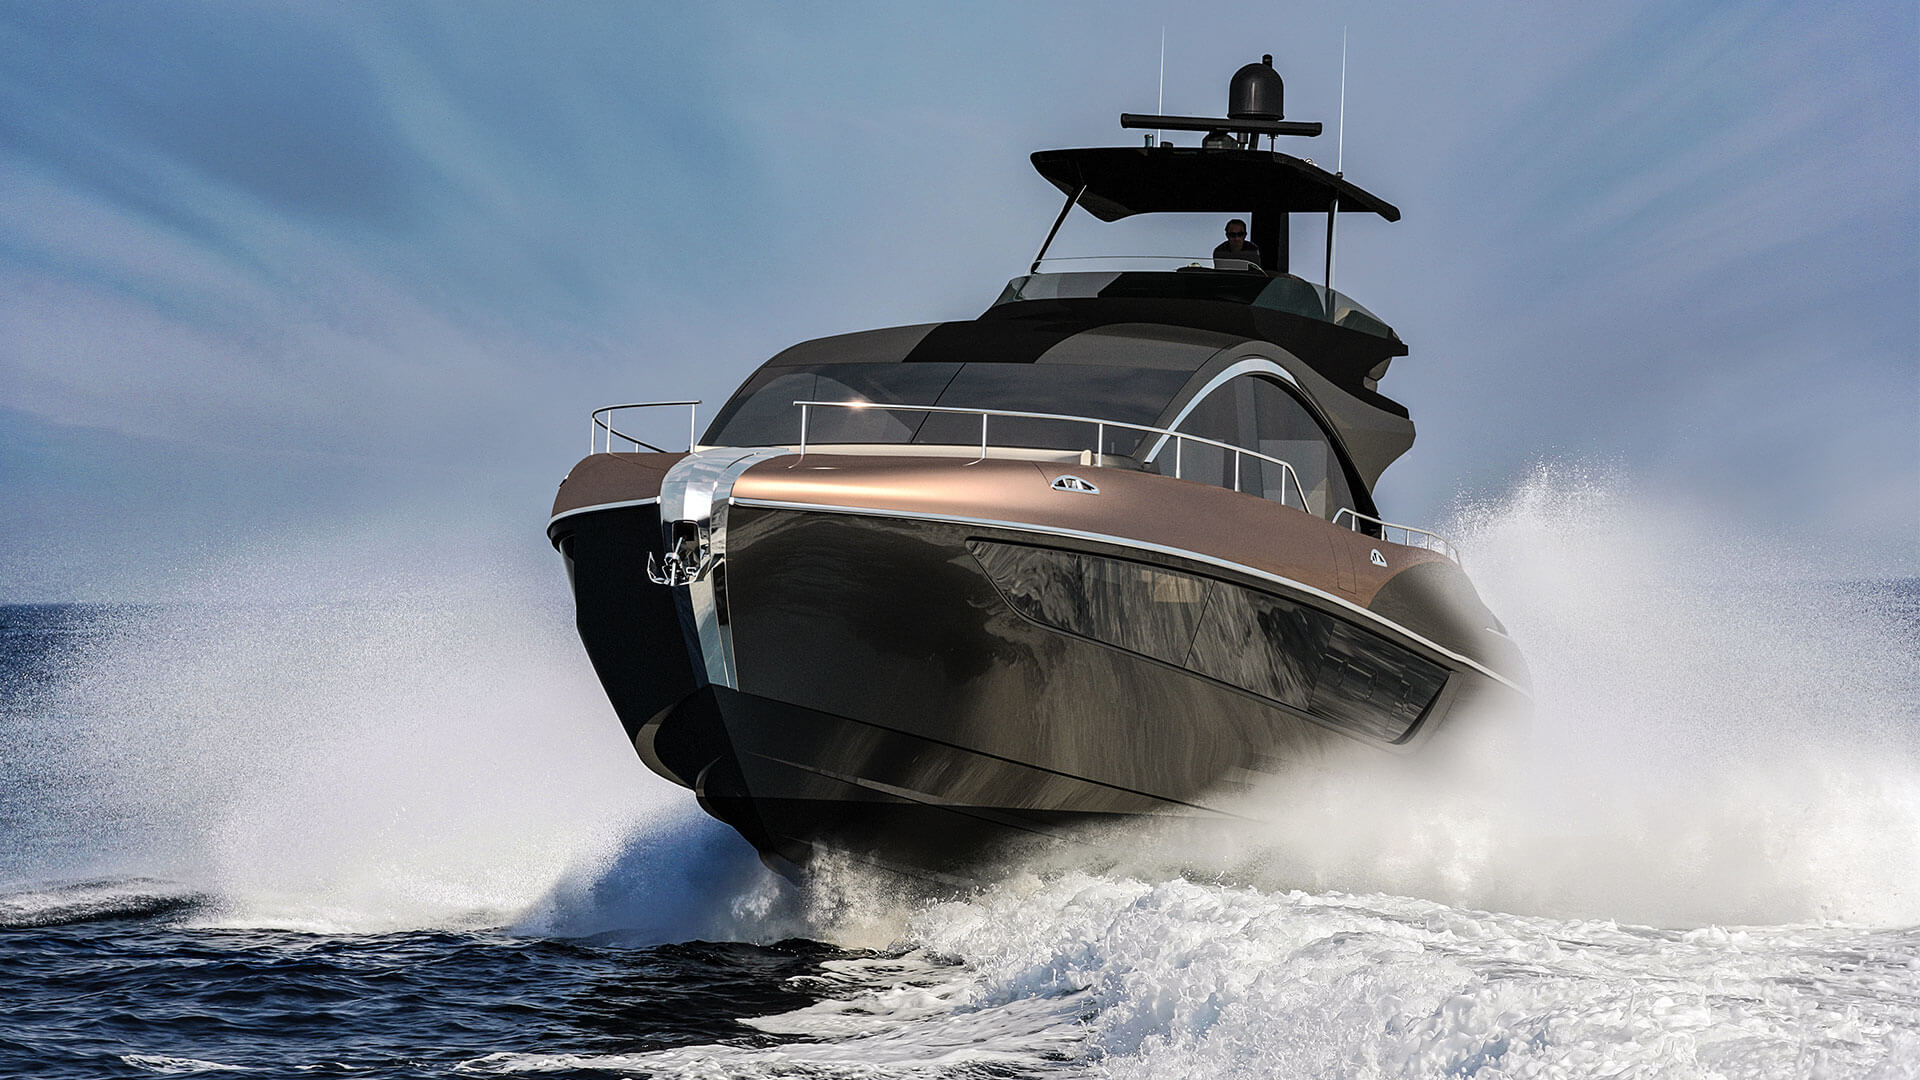 2019 lexus ly 650 luxury yacht hero